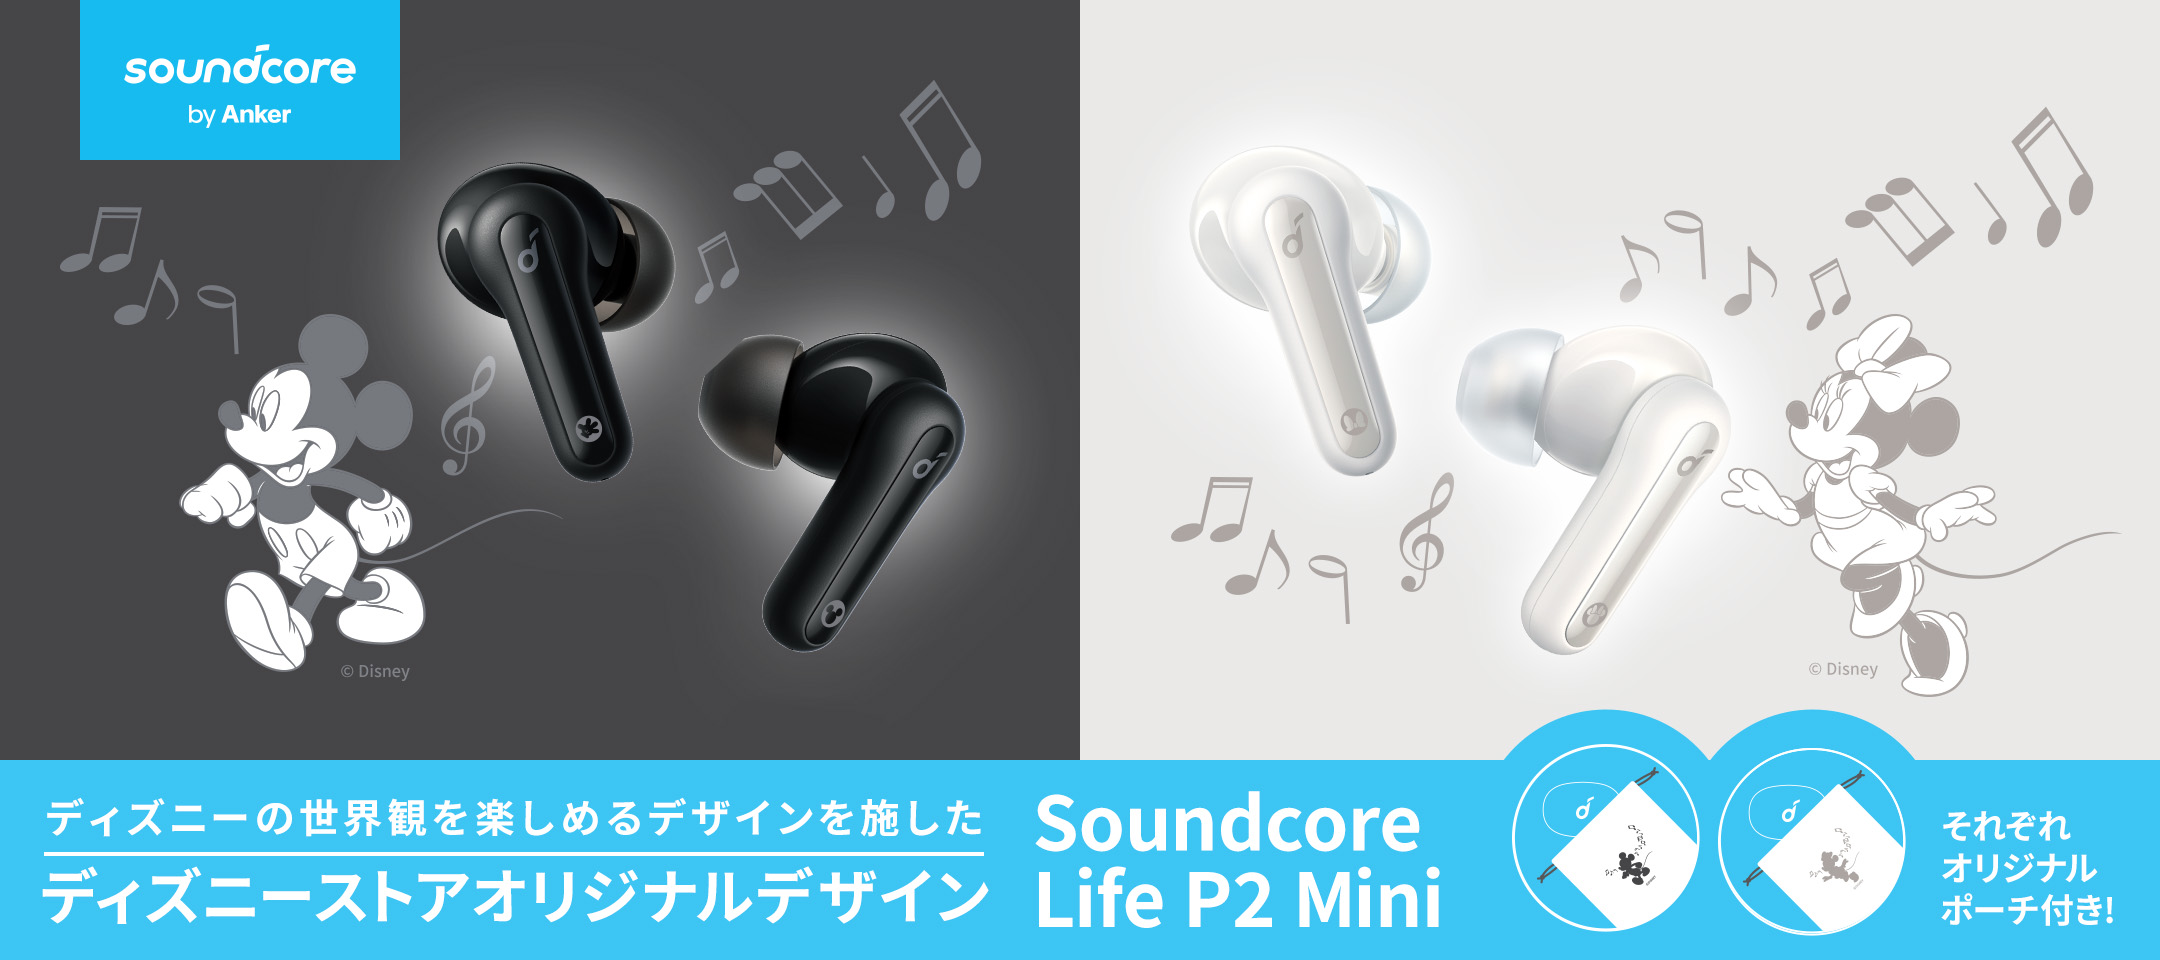 Soundcore Life P2 Mini | ディズニーの世界観を楽しめるデザインを施したディズニーストアオリジナルデザイン